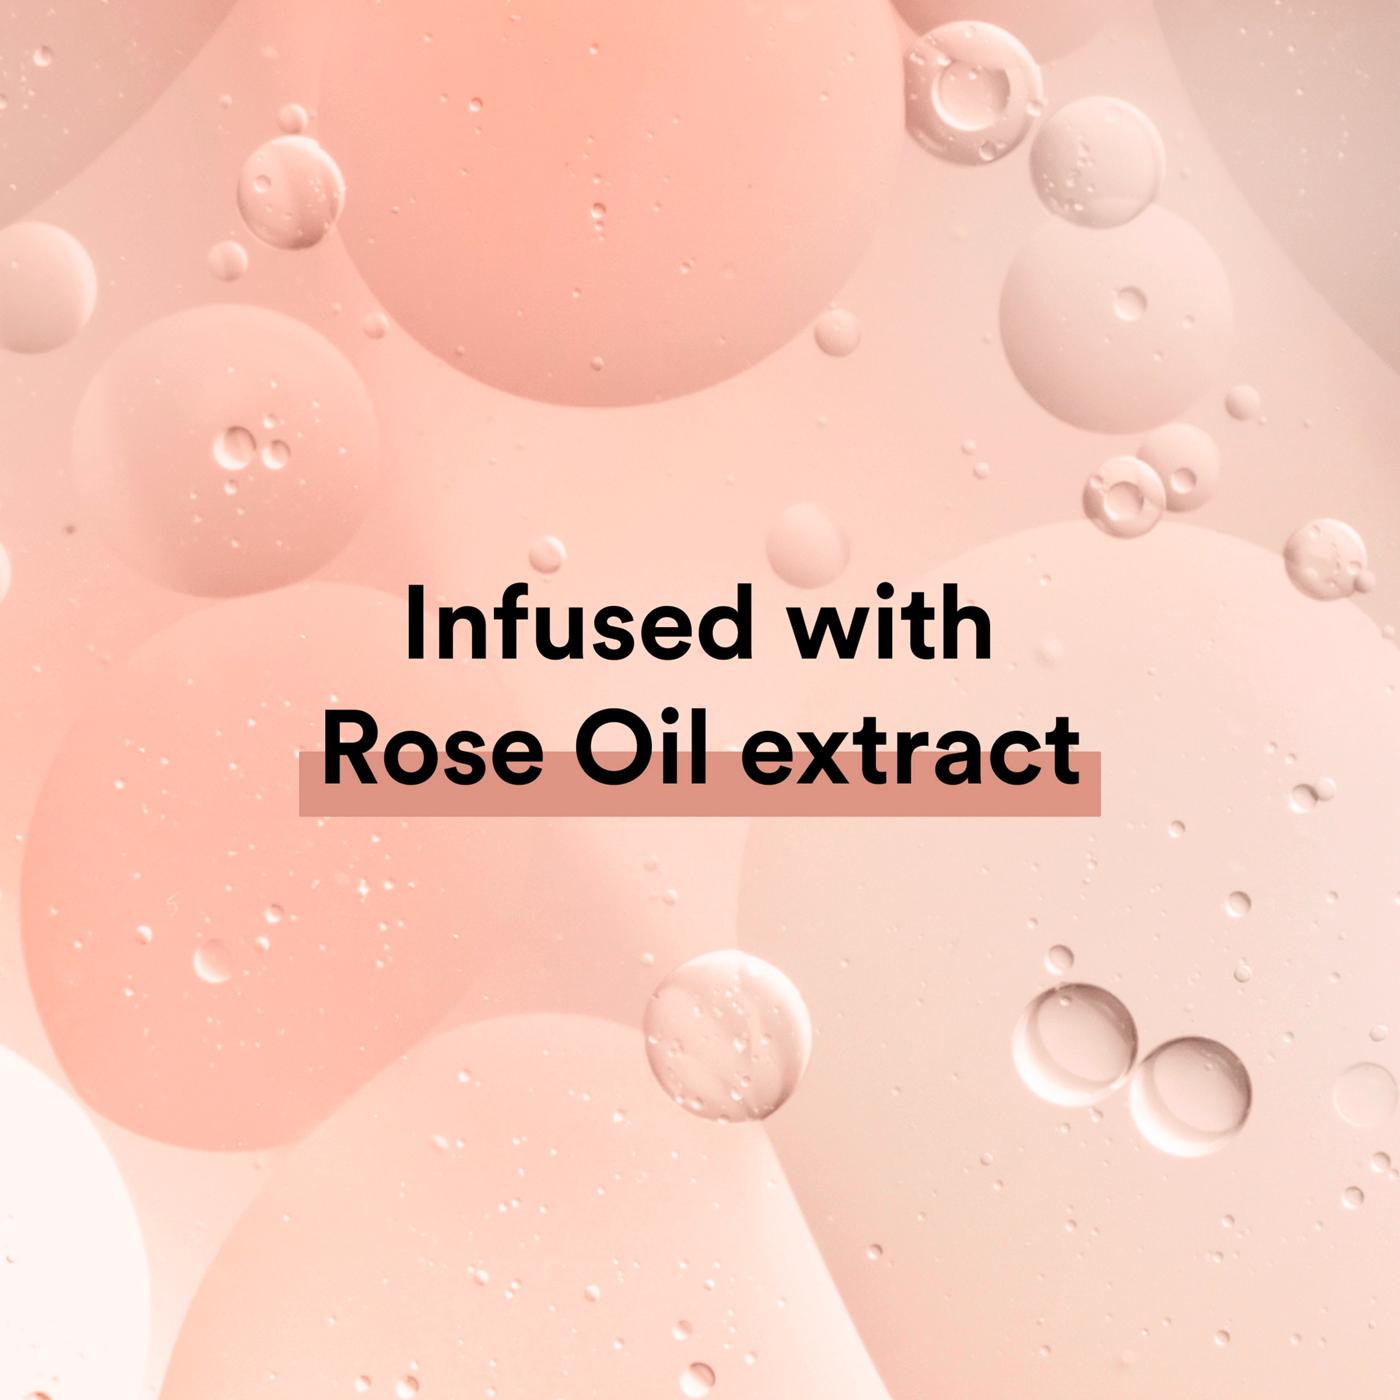 Suave Professionals Rose Oil Infusion Shampoo; image 7 of 7